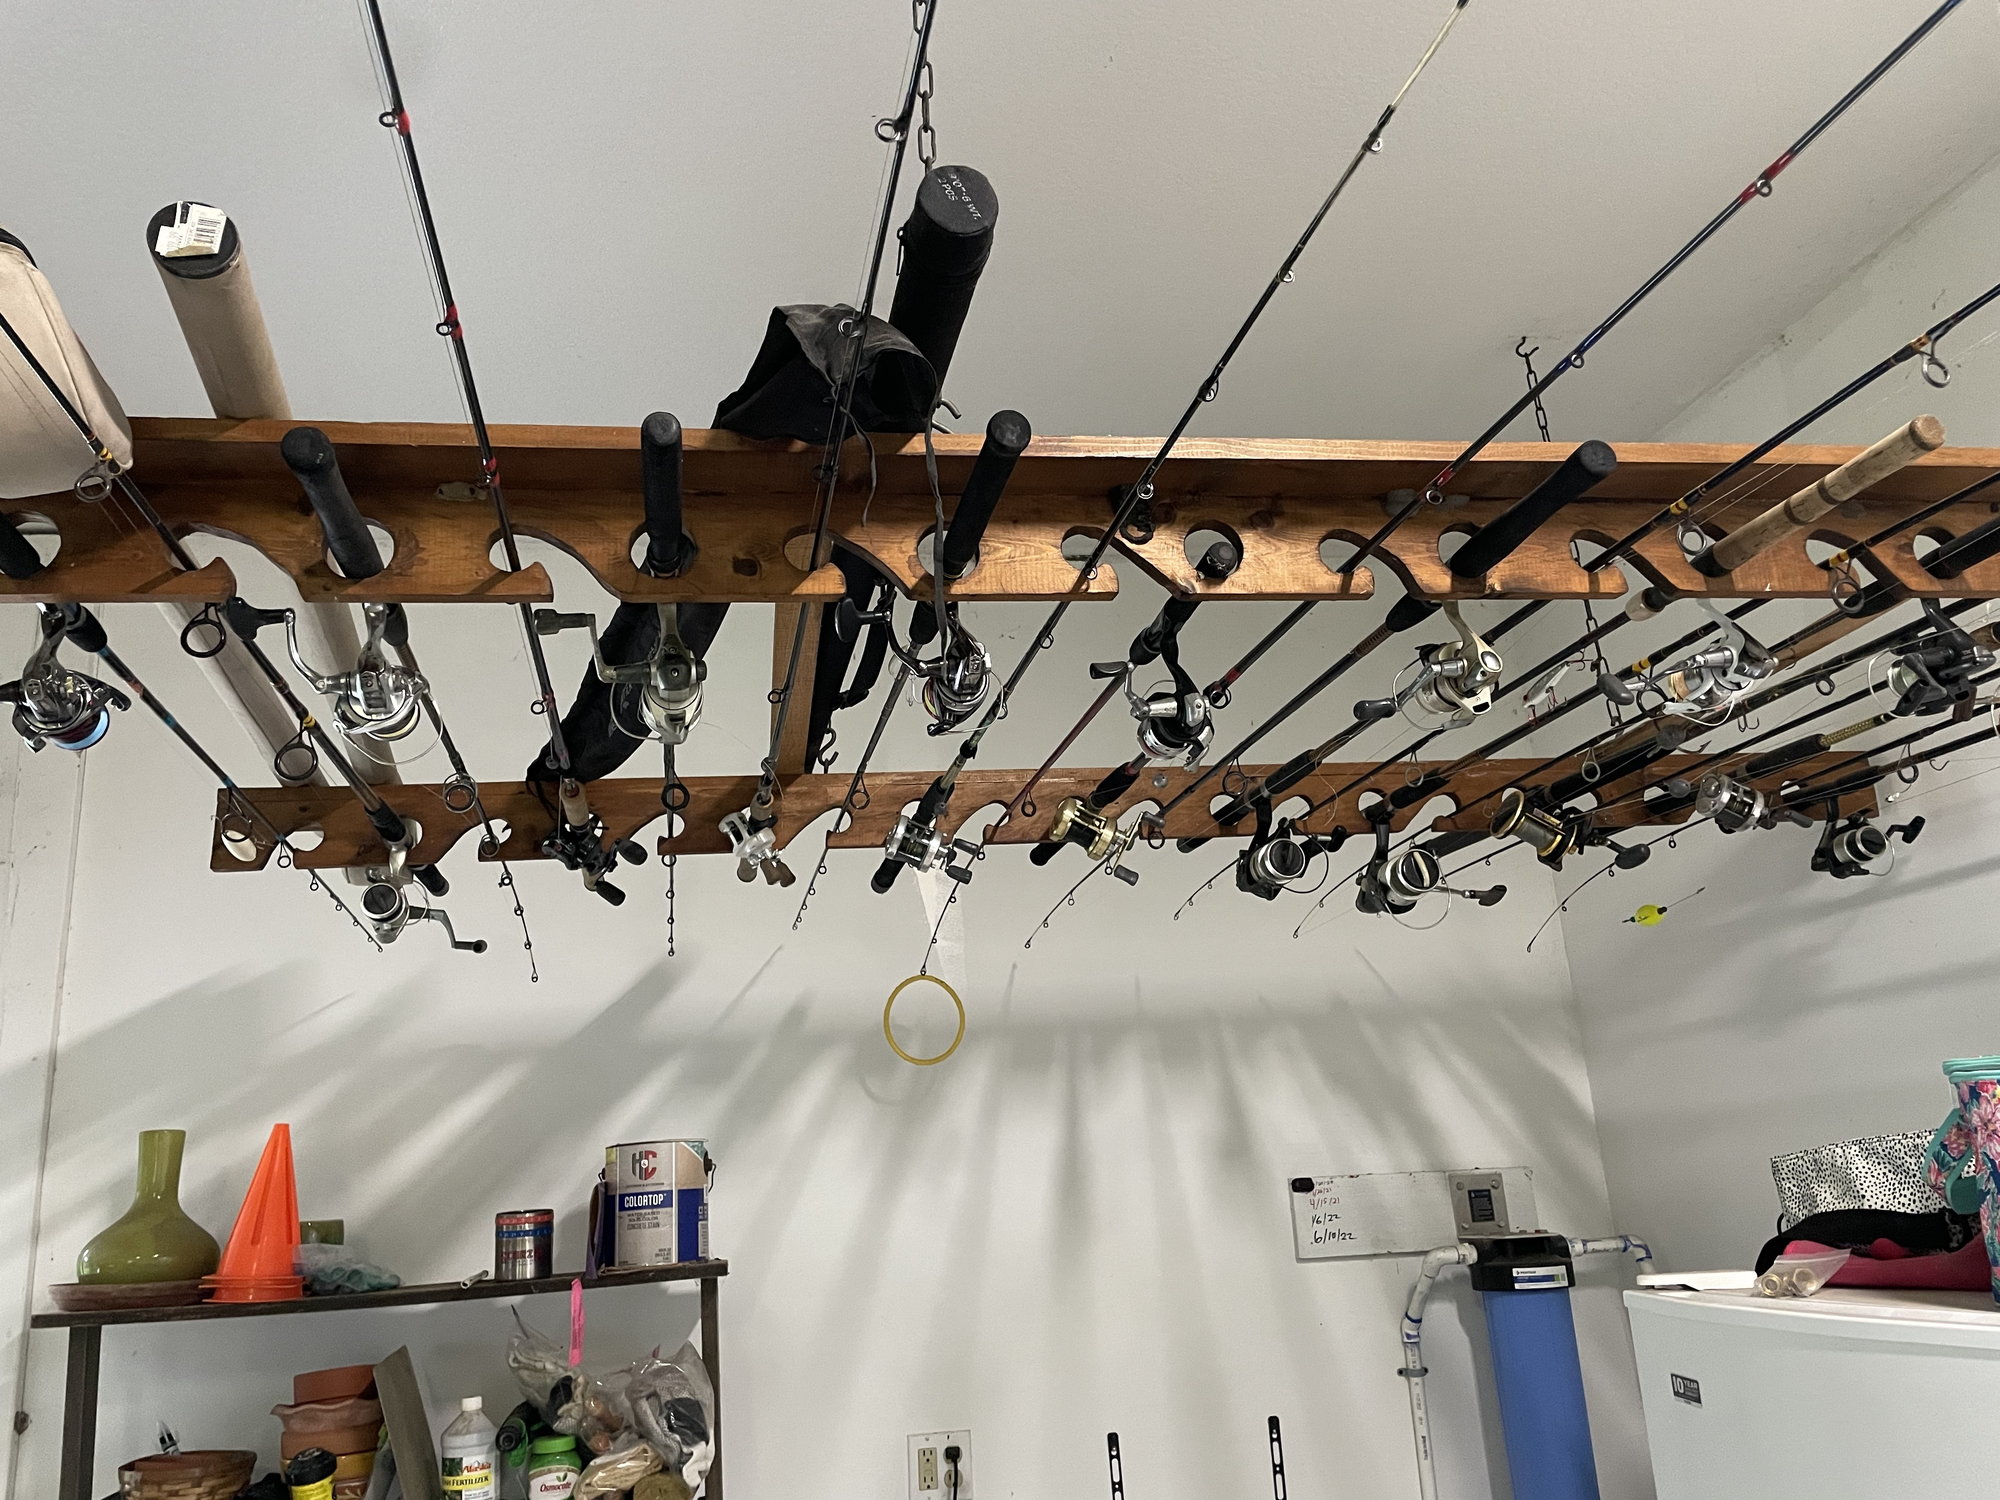 Fishing rod storage on the garage door. Rod holders screwed onto